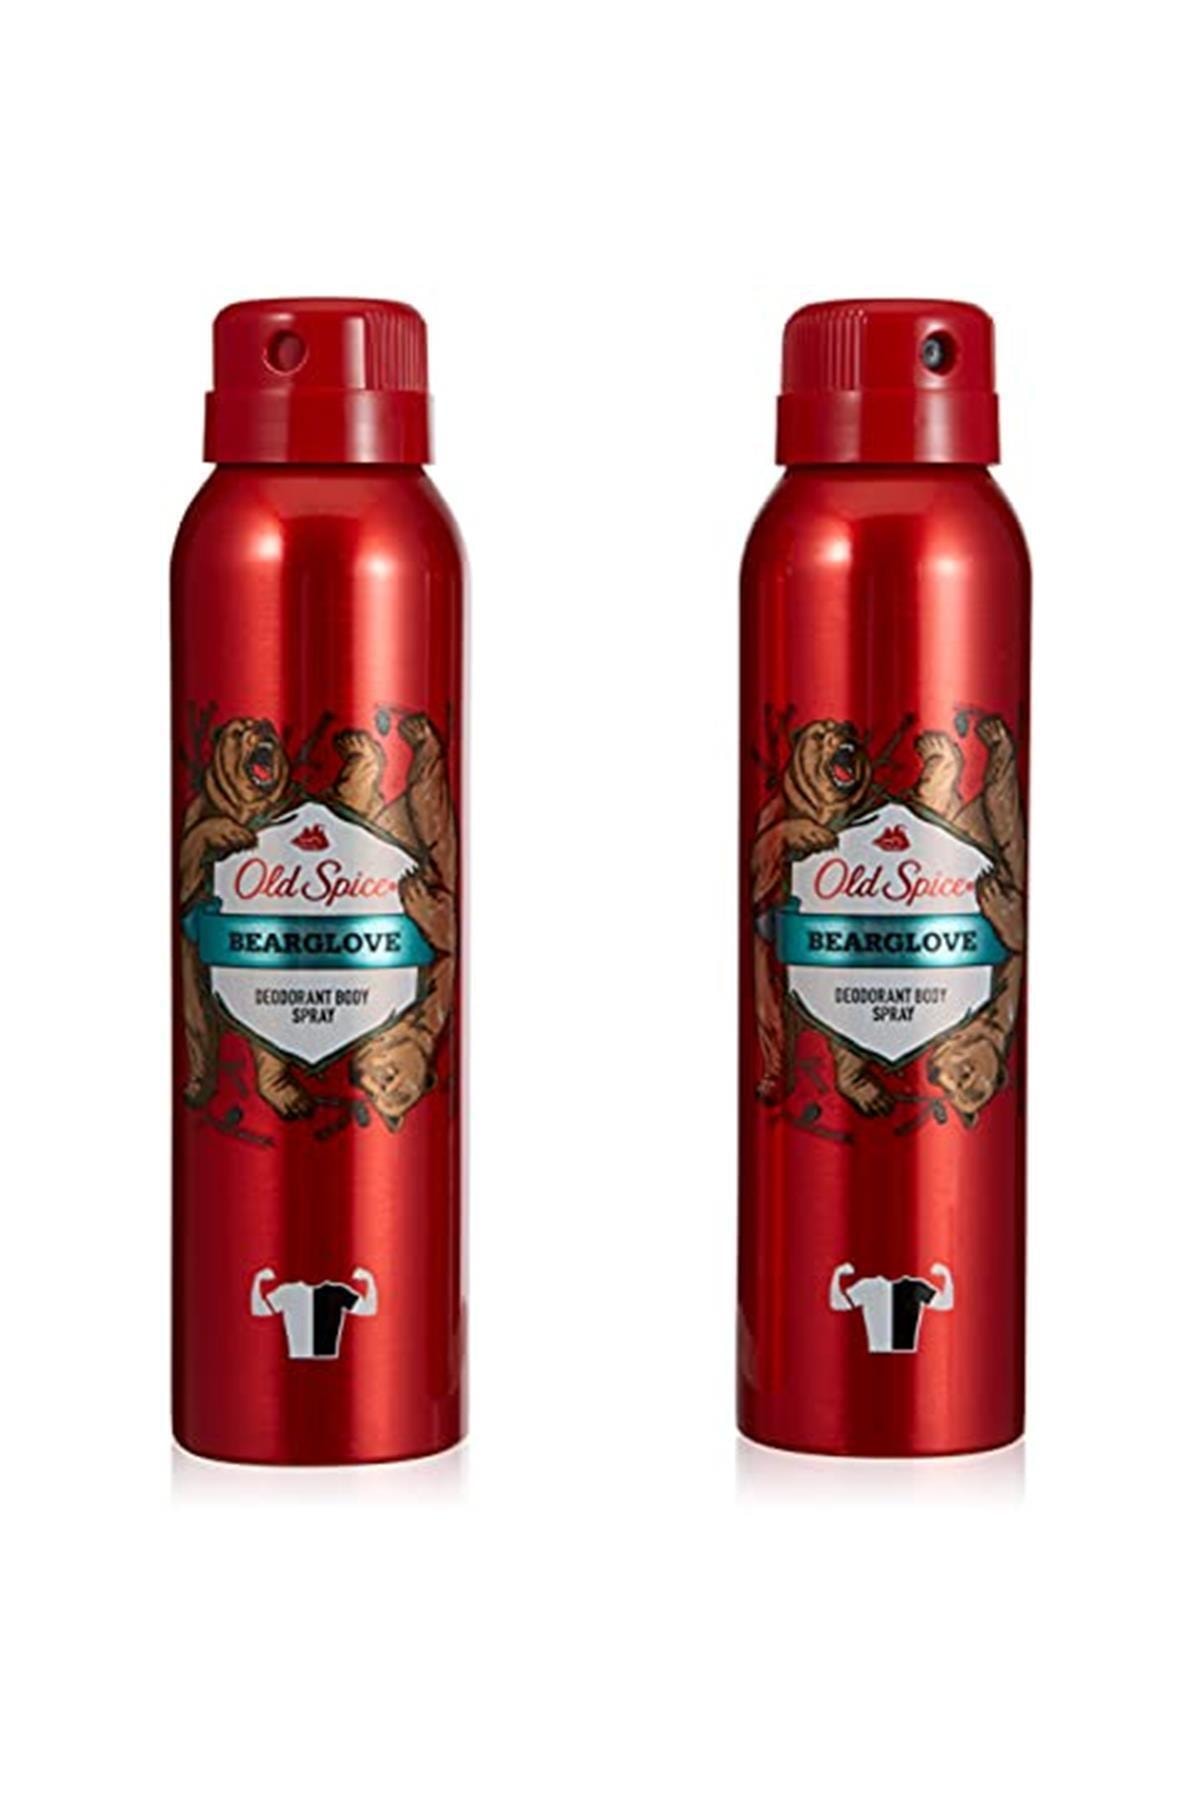 Old Spice Marka: Sprey Deodorant 2x150 Ml (300 Ml) Bearglove Kategori: Deodorant